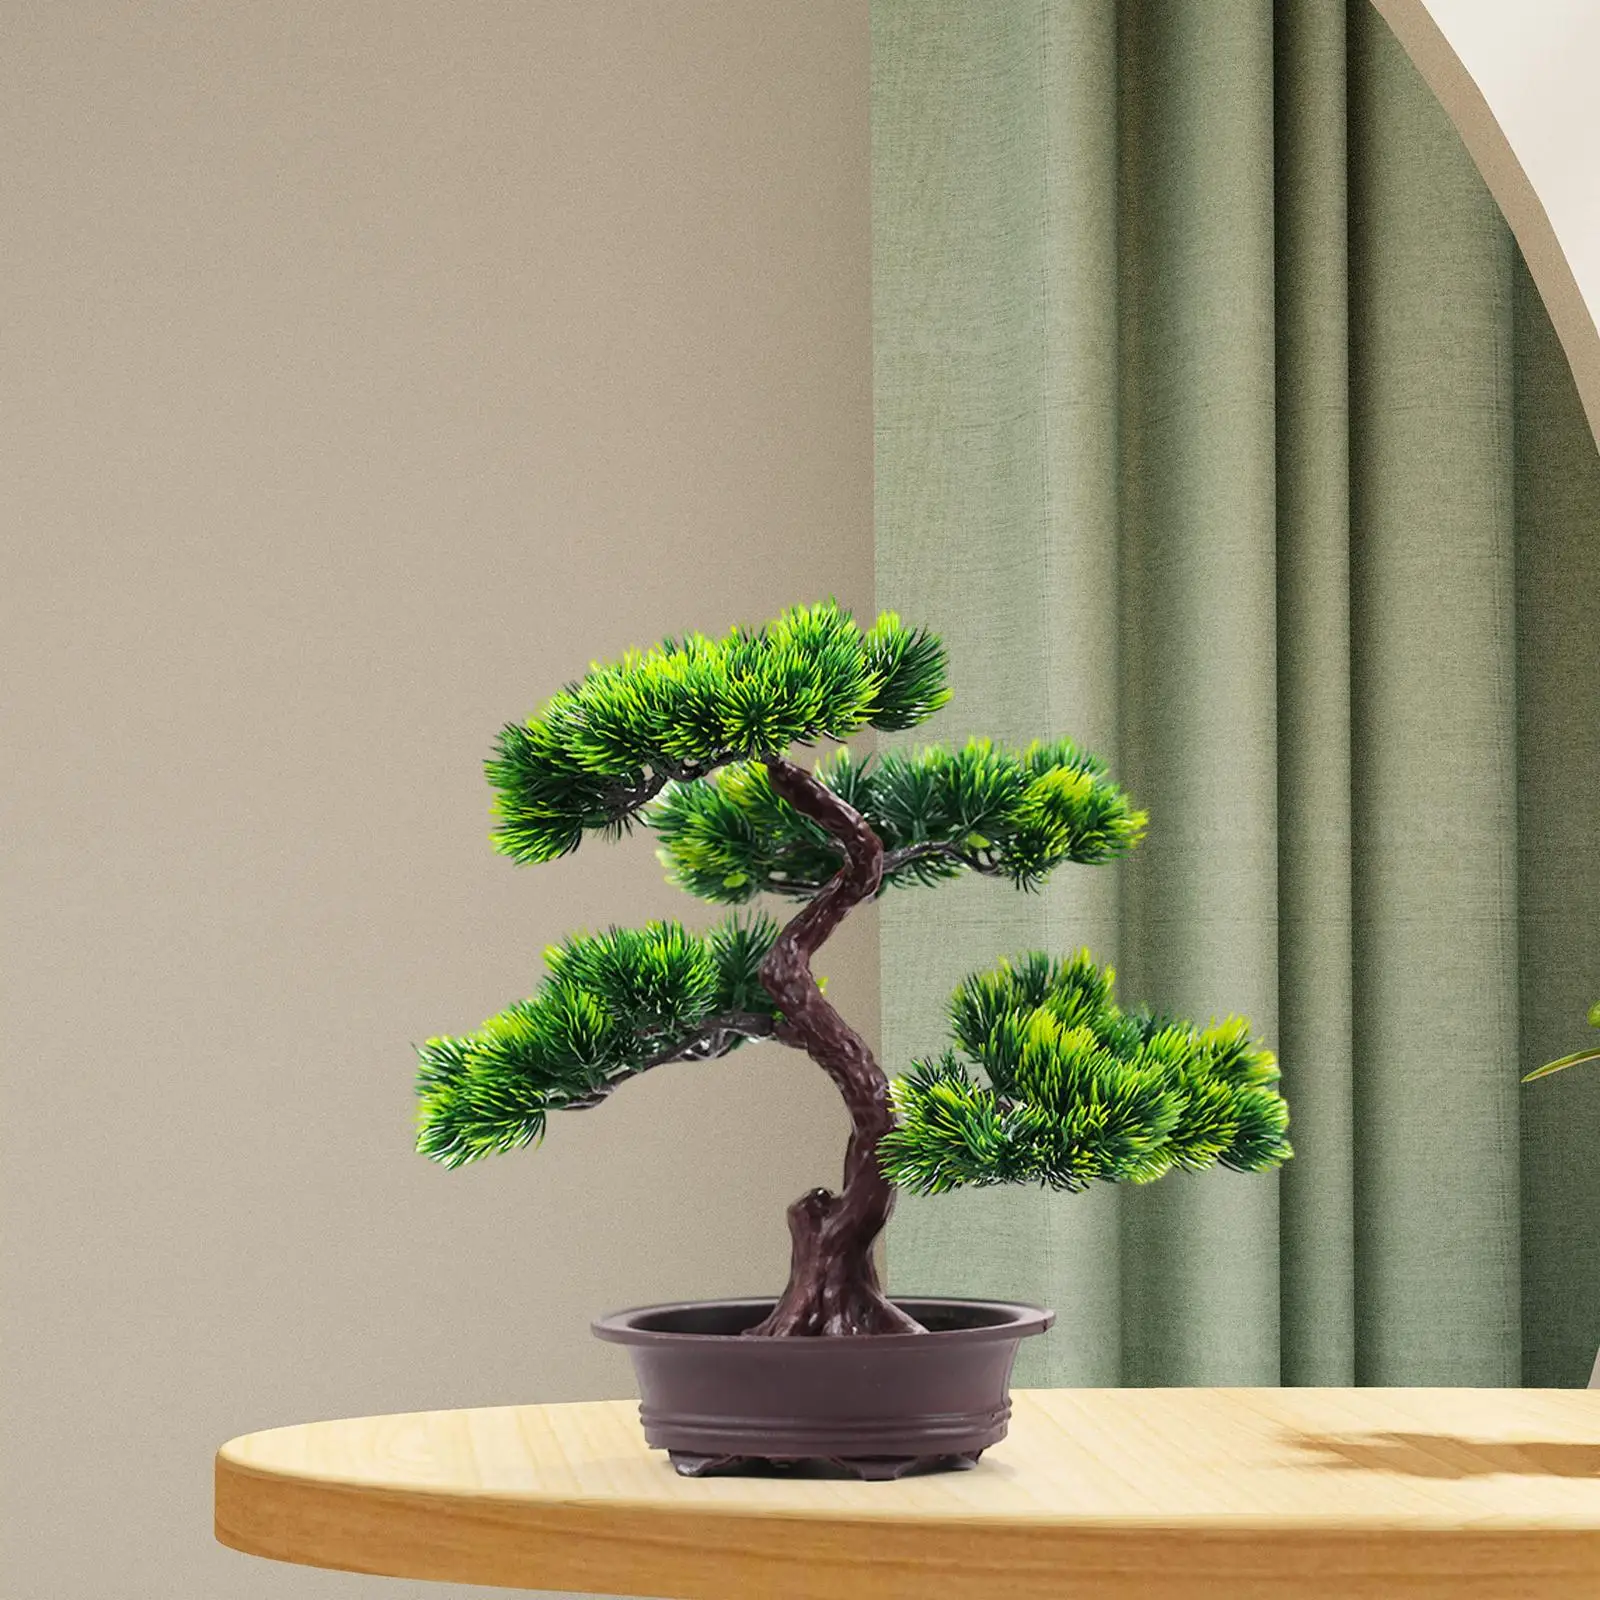 Artificial Bonsai Tree Desktop Display Potted Green Tree Decorative Bonsai Fake Tree for Desk Bathroom Office Living Room Table